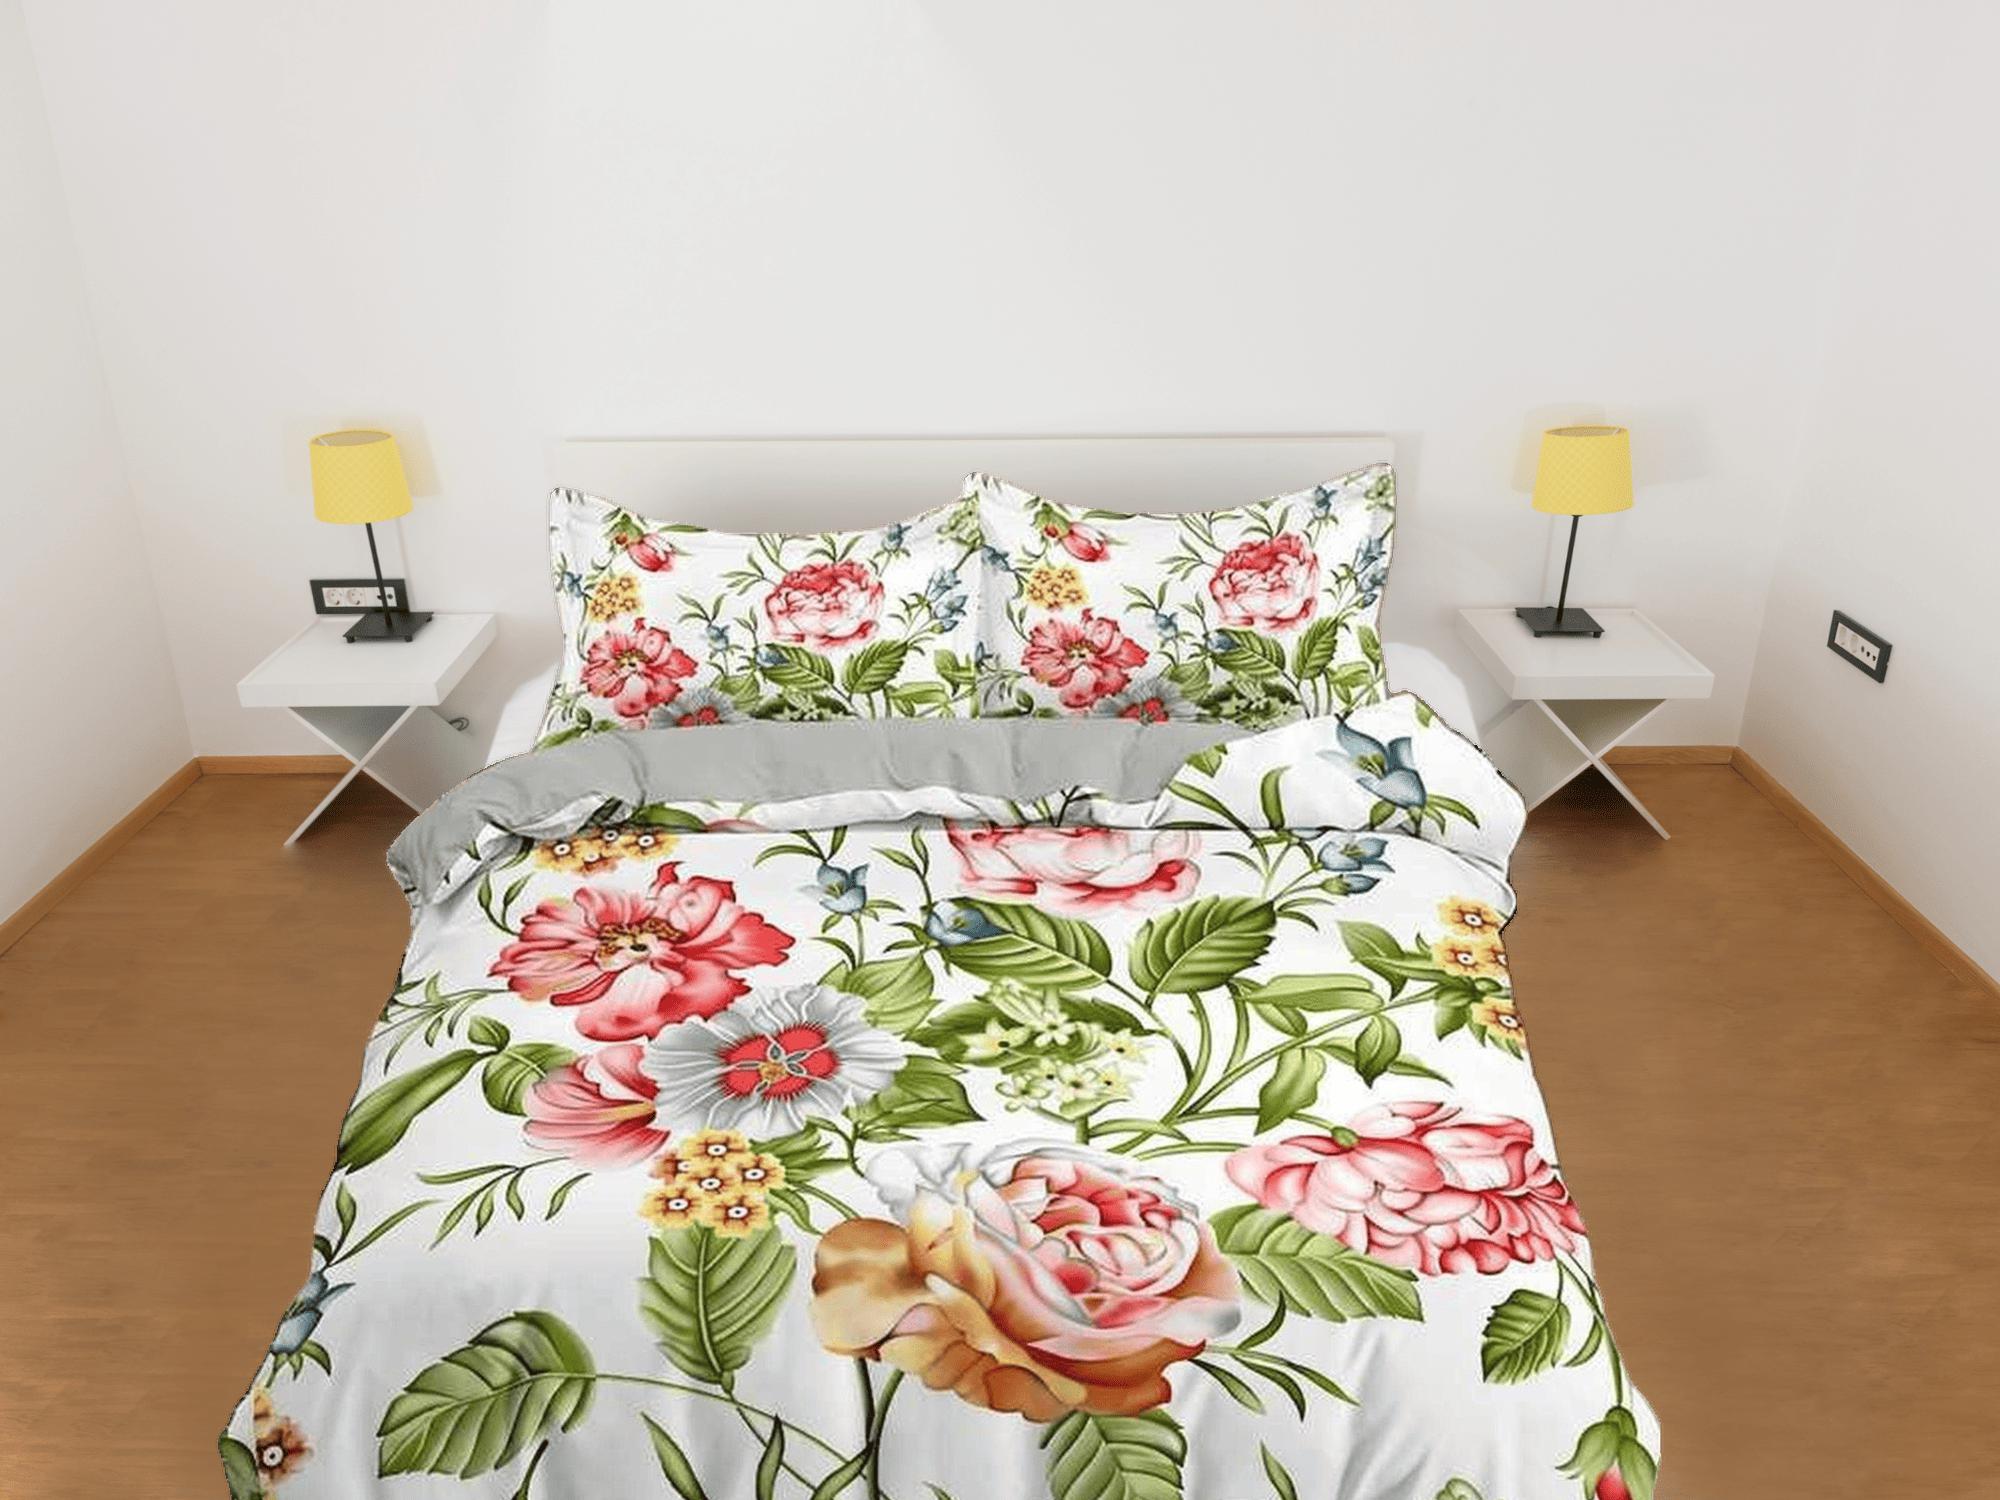 daintyduvet Shabby chic bedding floral duvet cover, teen girl bedroom, baby girl crib bedding boho maximalist bedspread aesthetic bedding